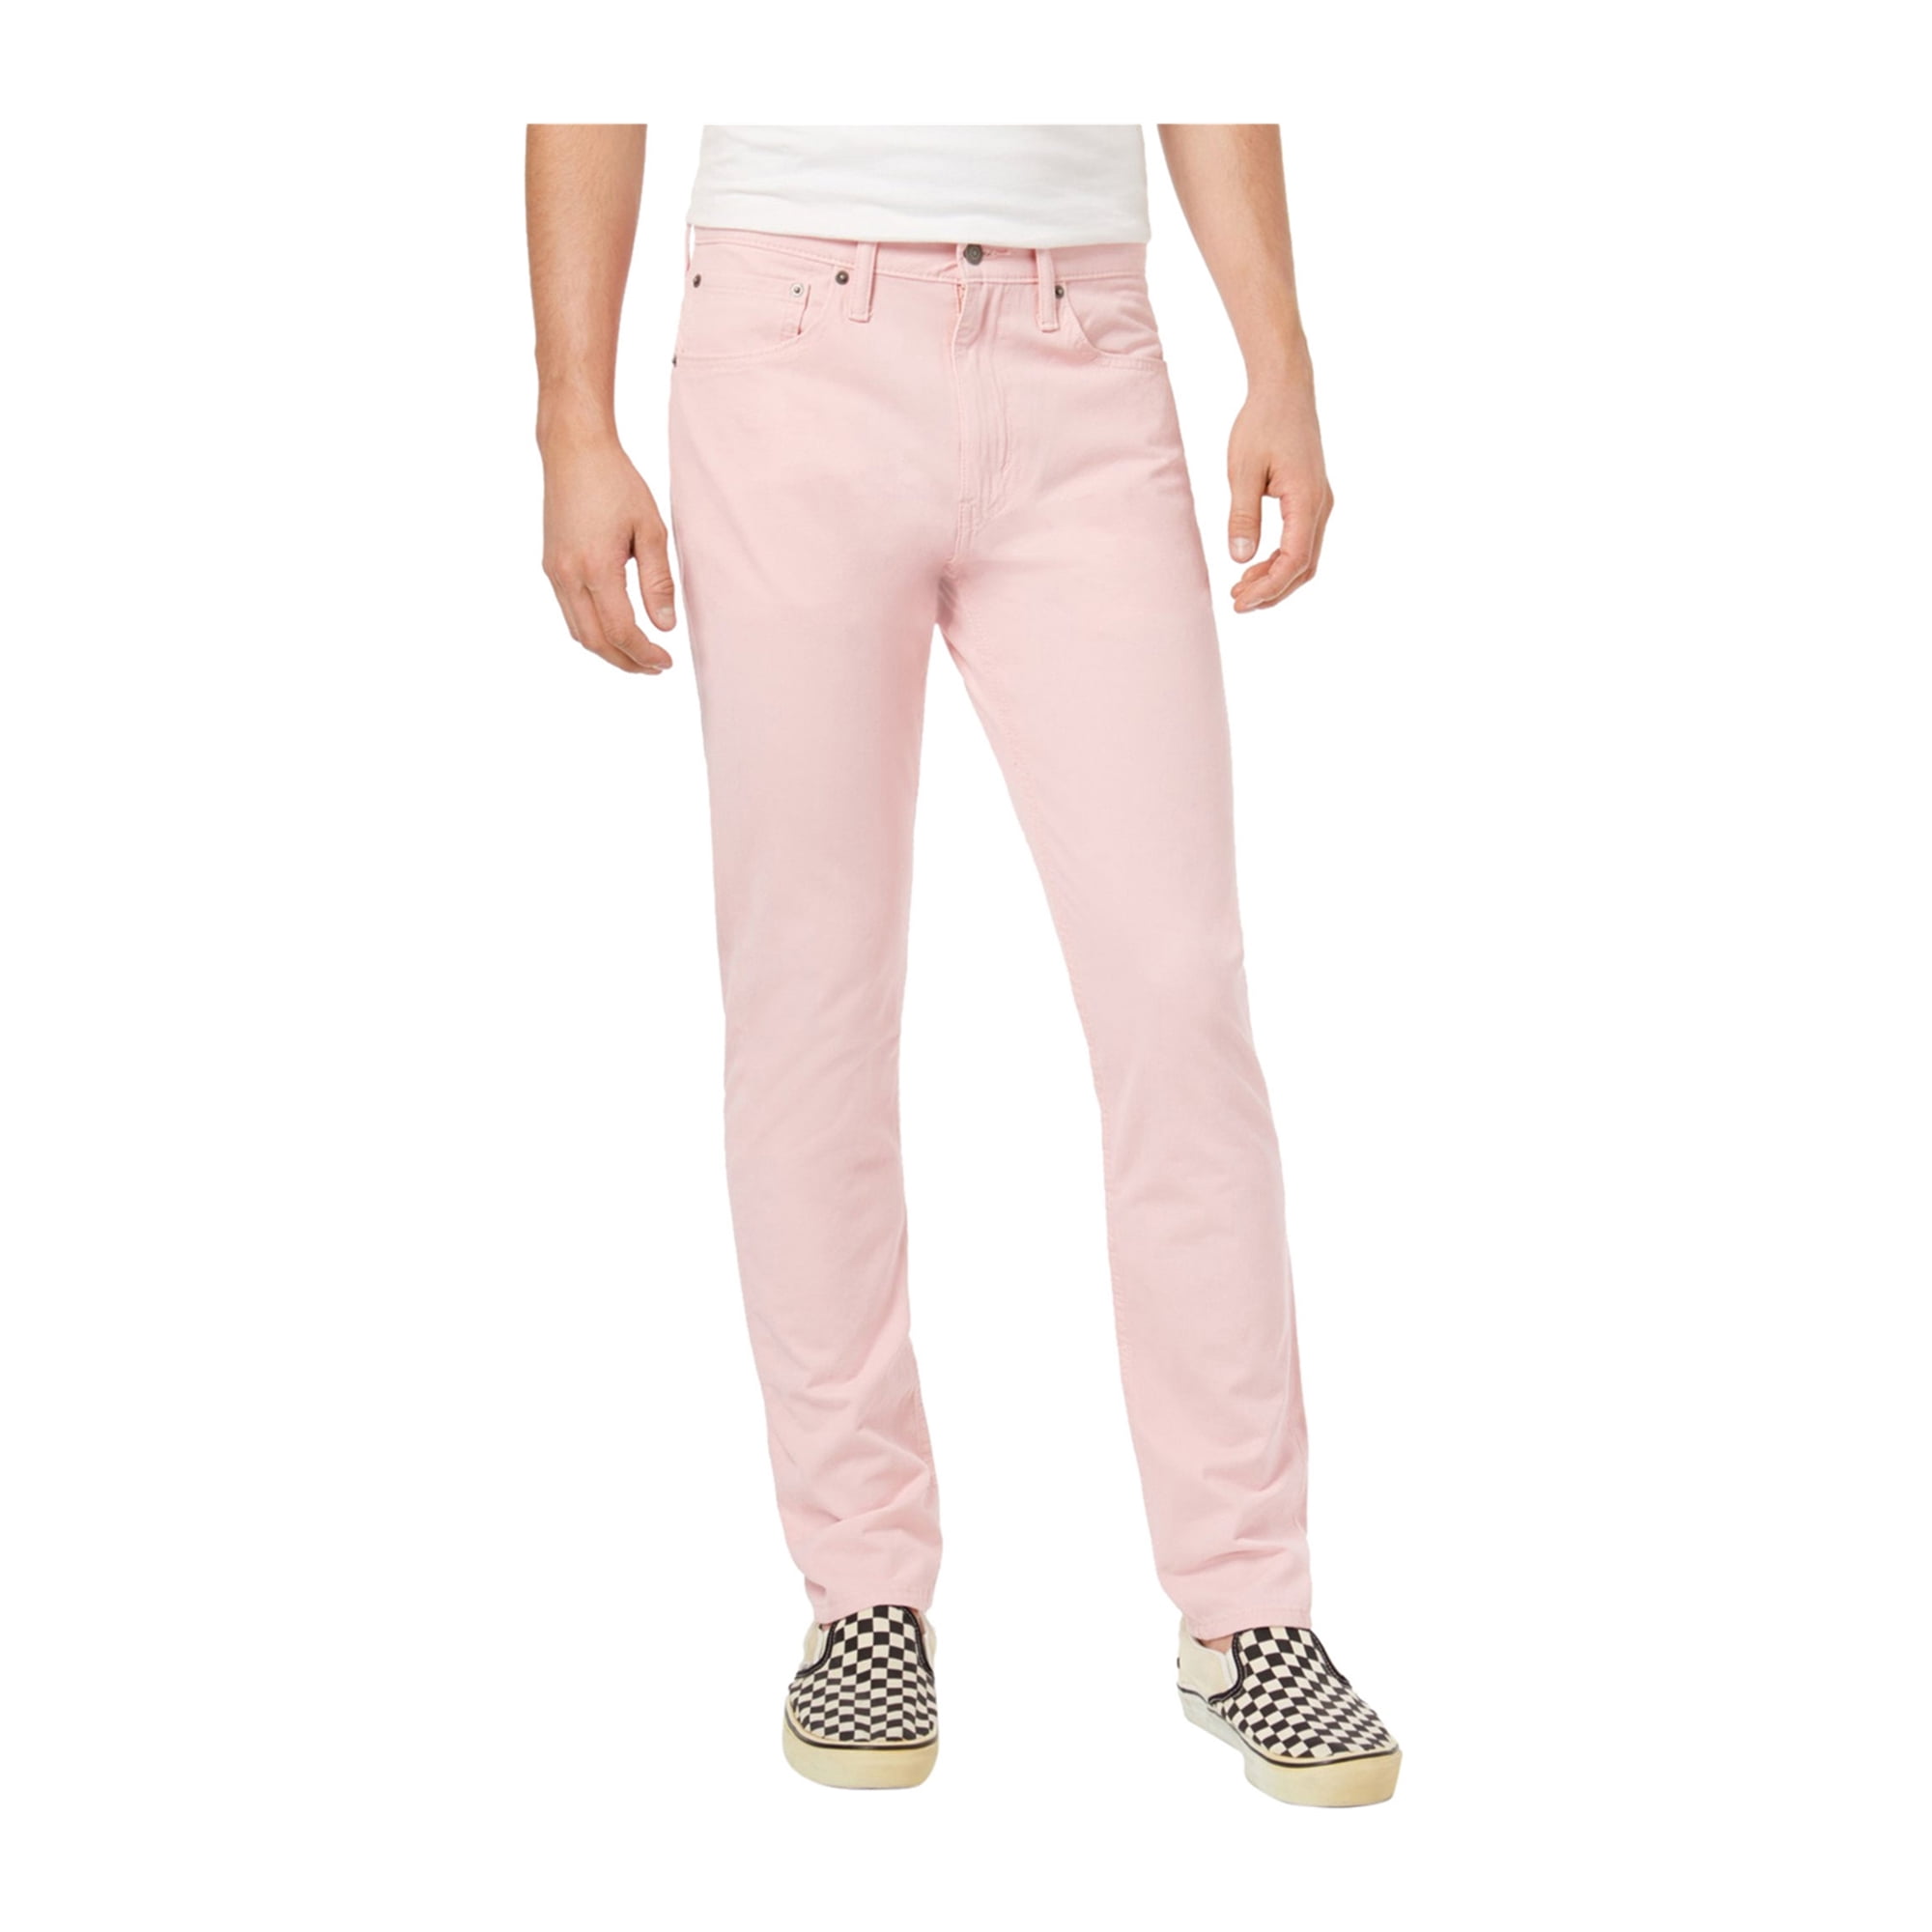 Levi's Mens 512 Slim Fit Jeans coralblush 36x30 | Walmart Canada